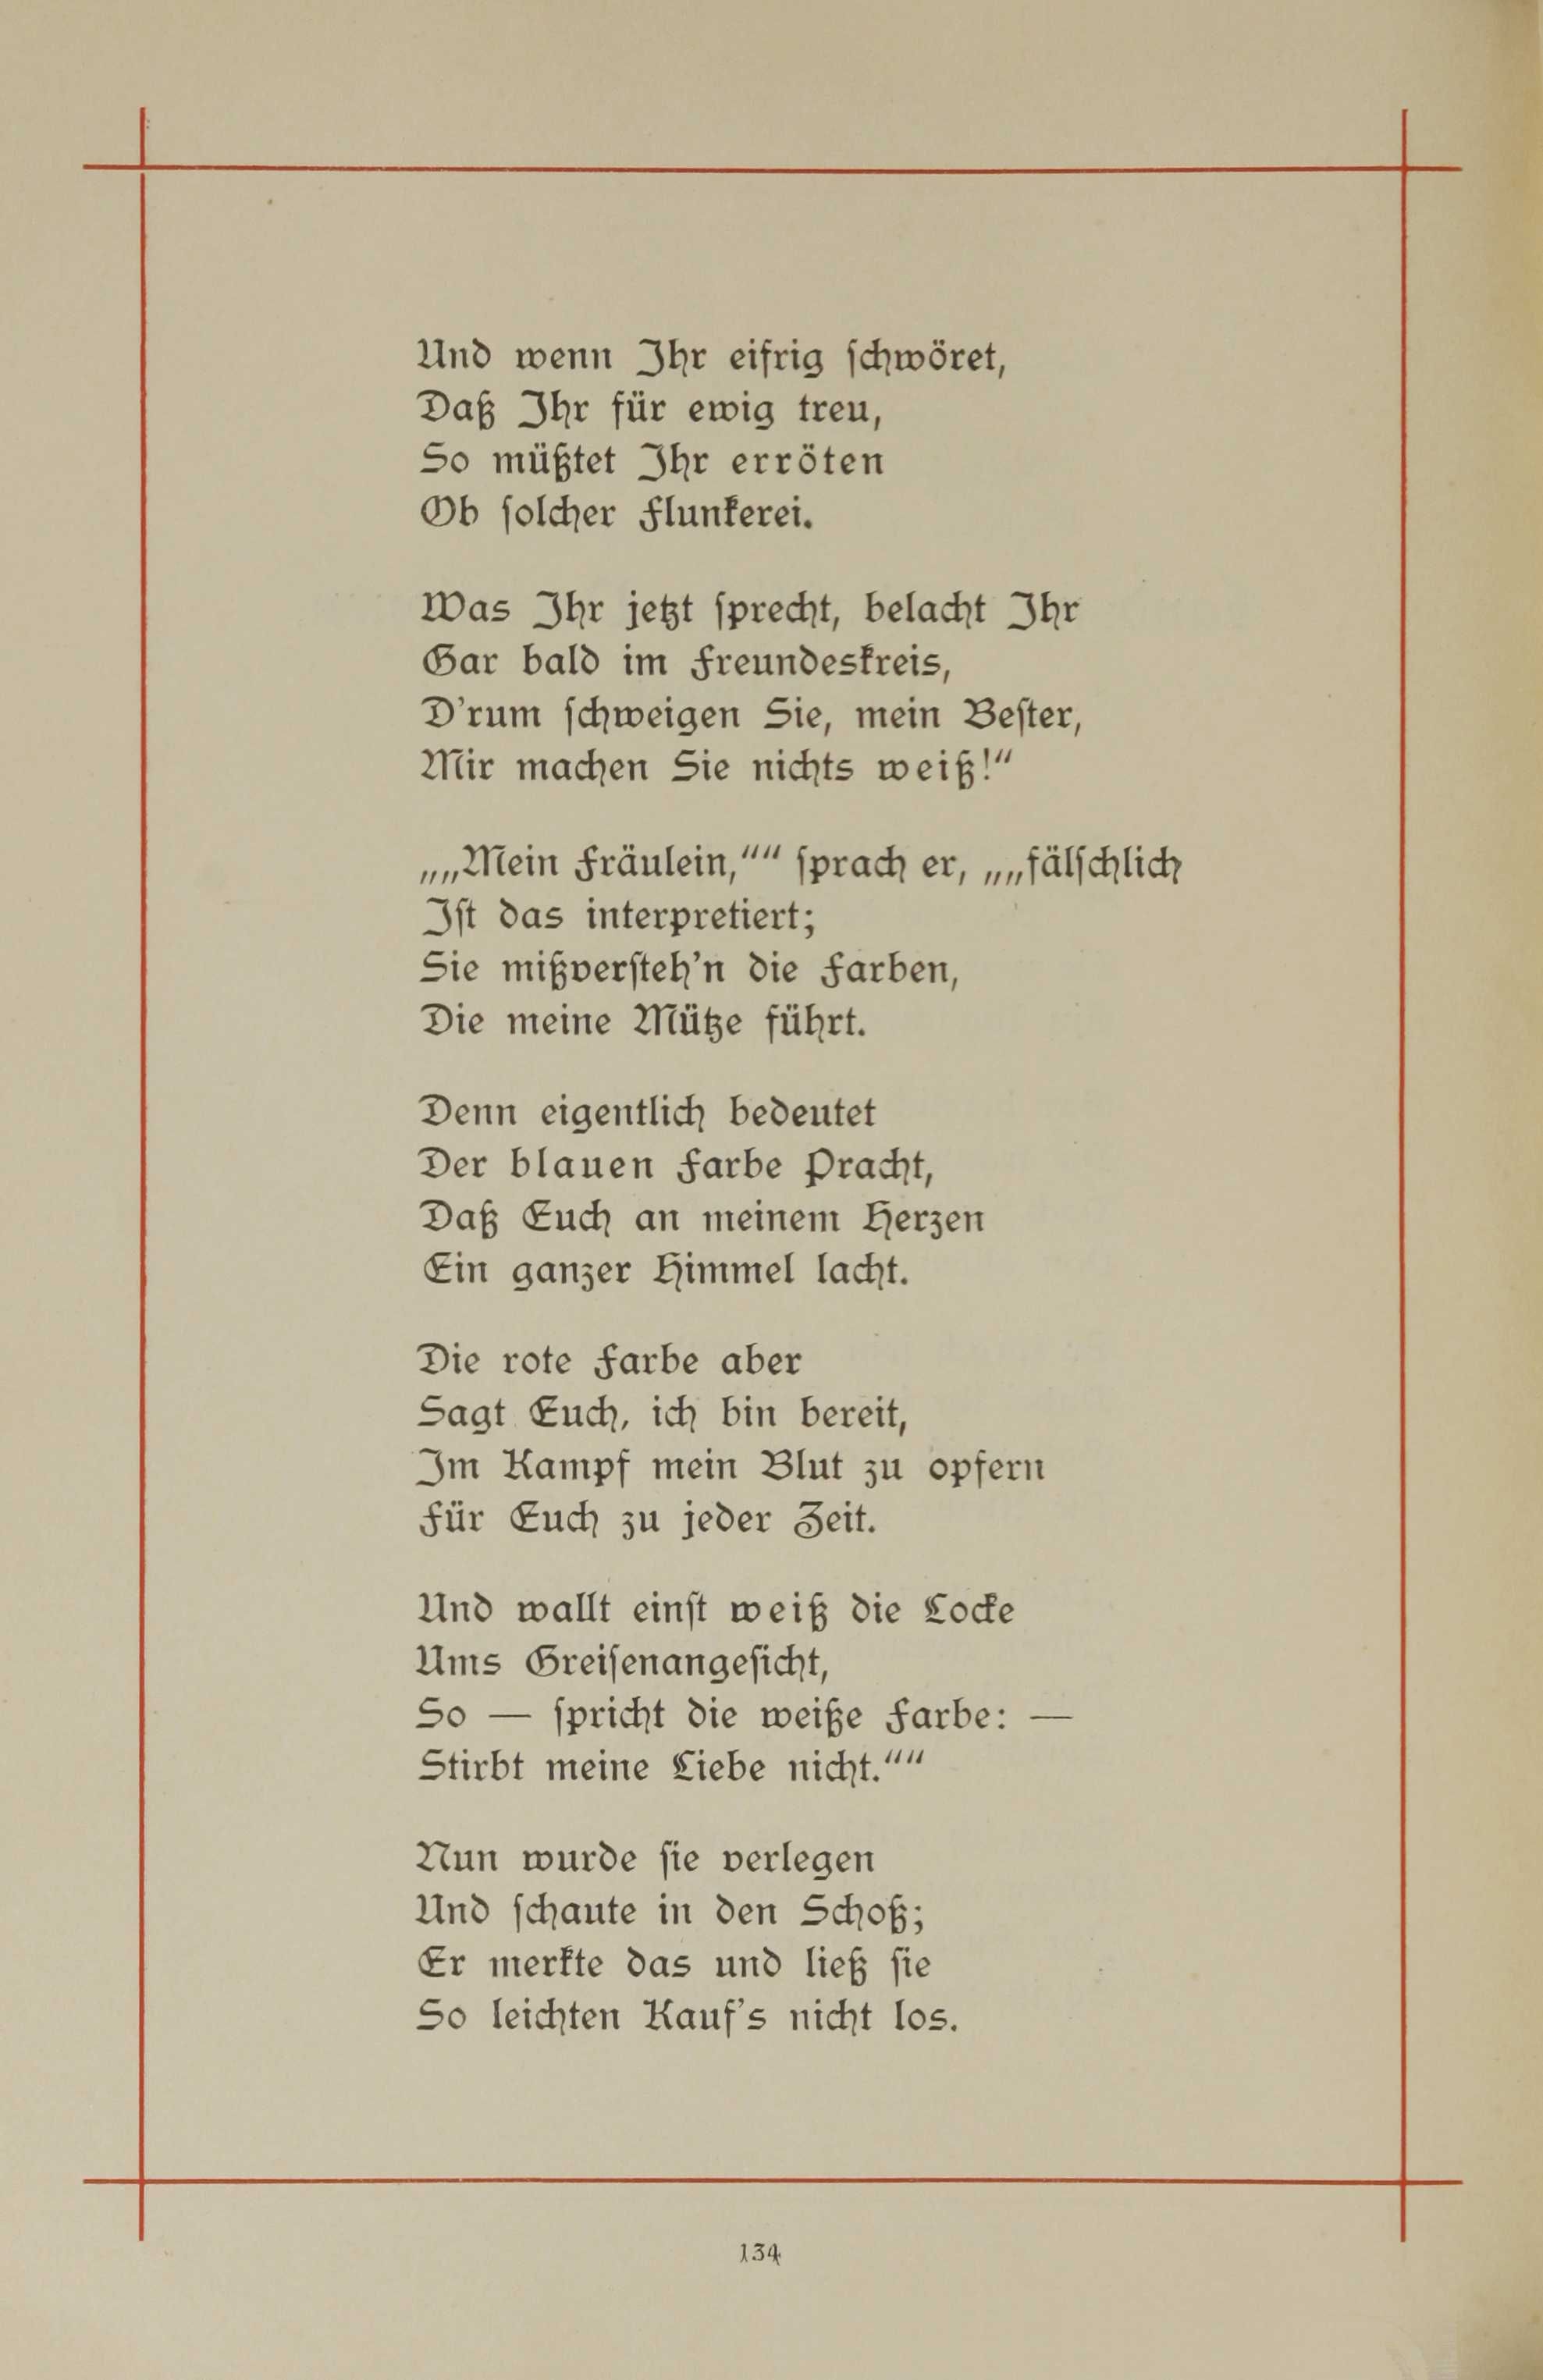 Erinnerung an die Fraternitas (1893) | 139. (134) Main body of text